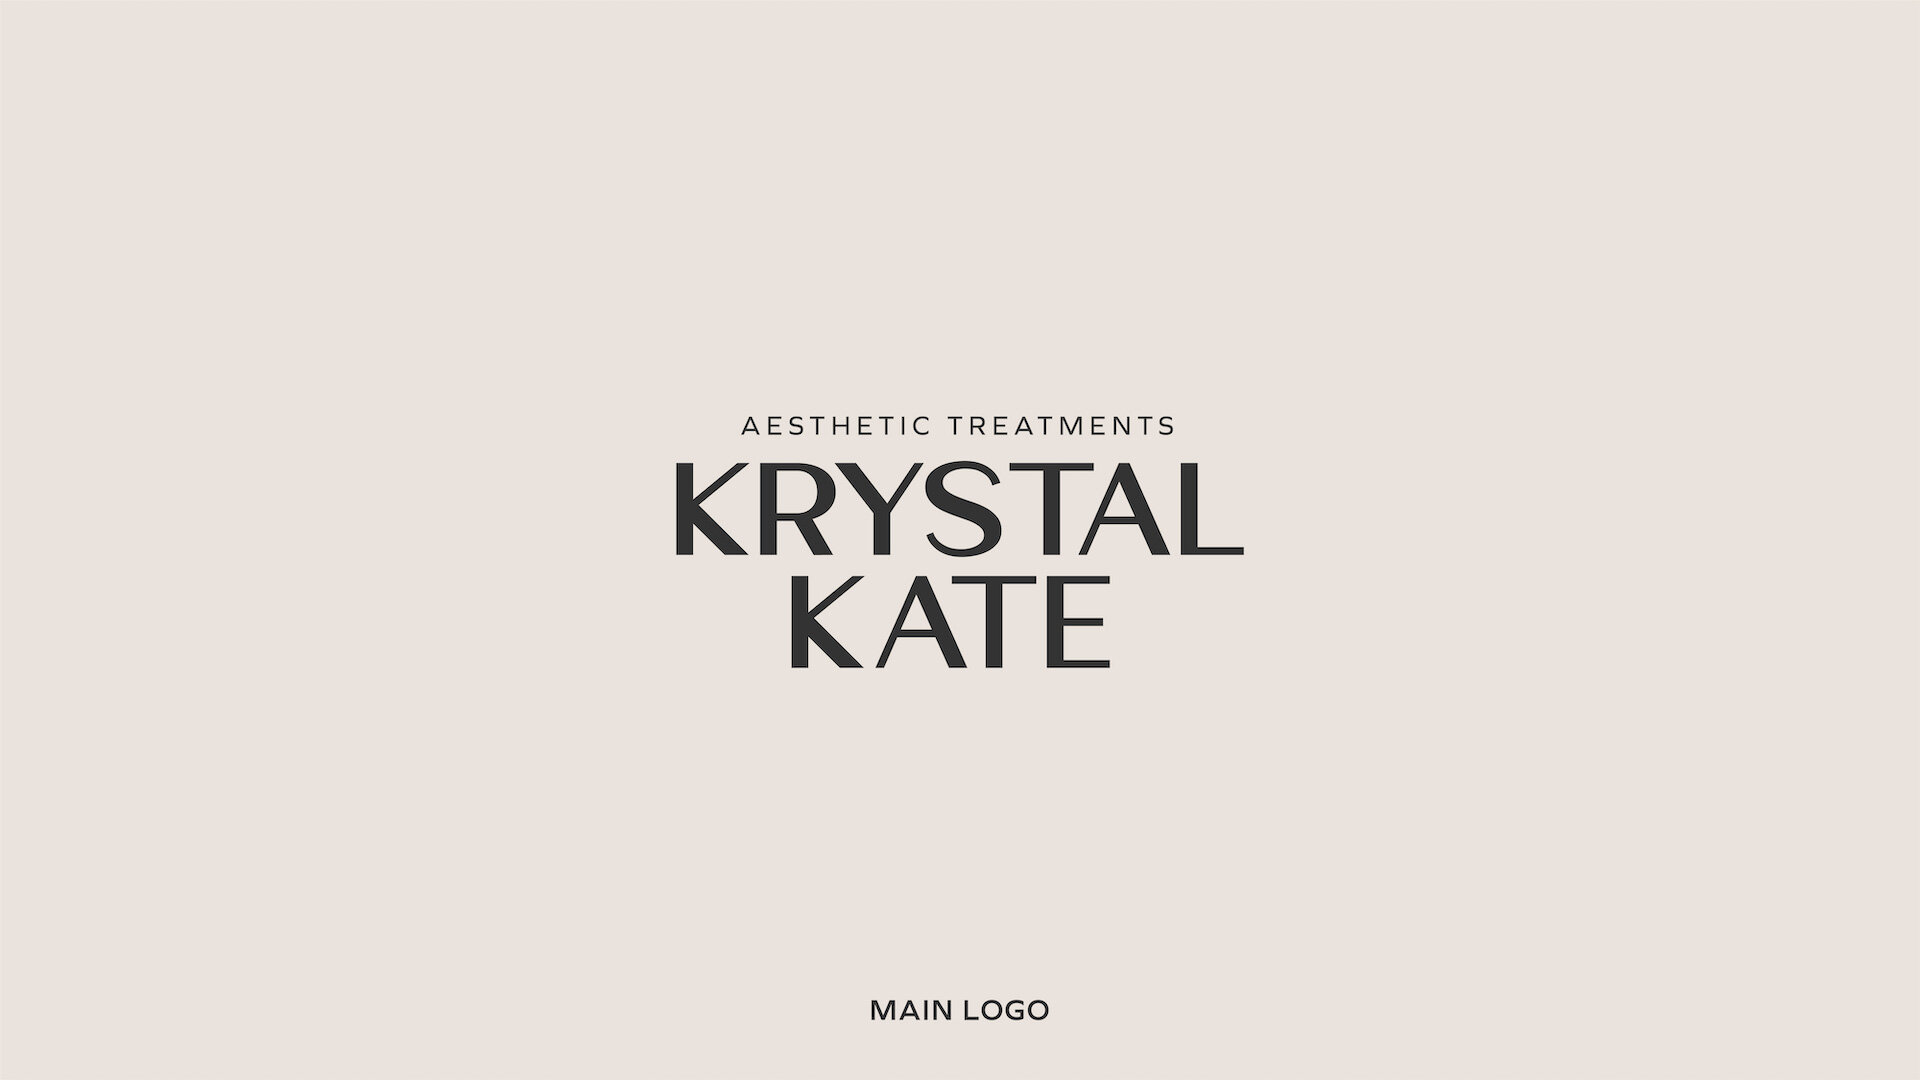 Krystal Kate Aesthetic Treatments Kelsey